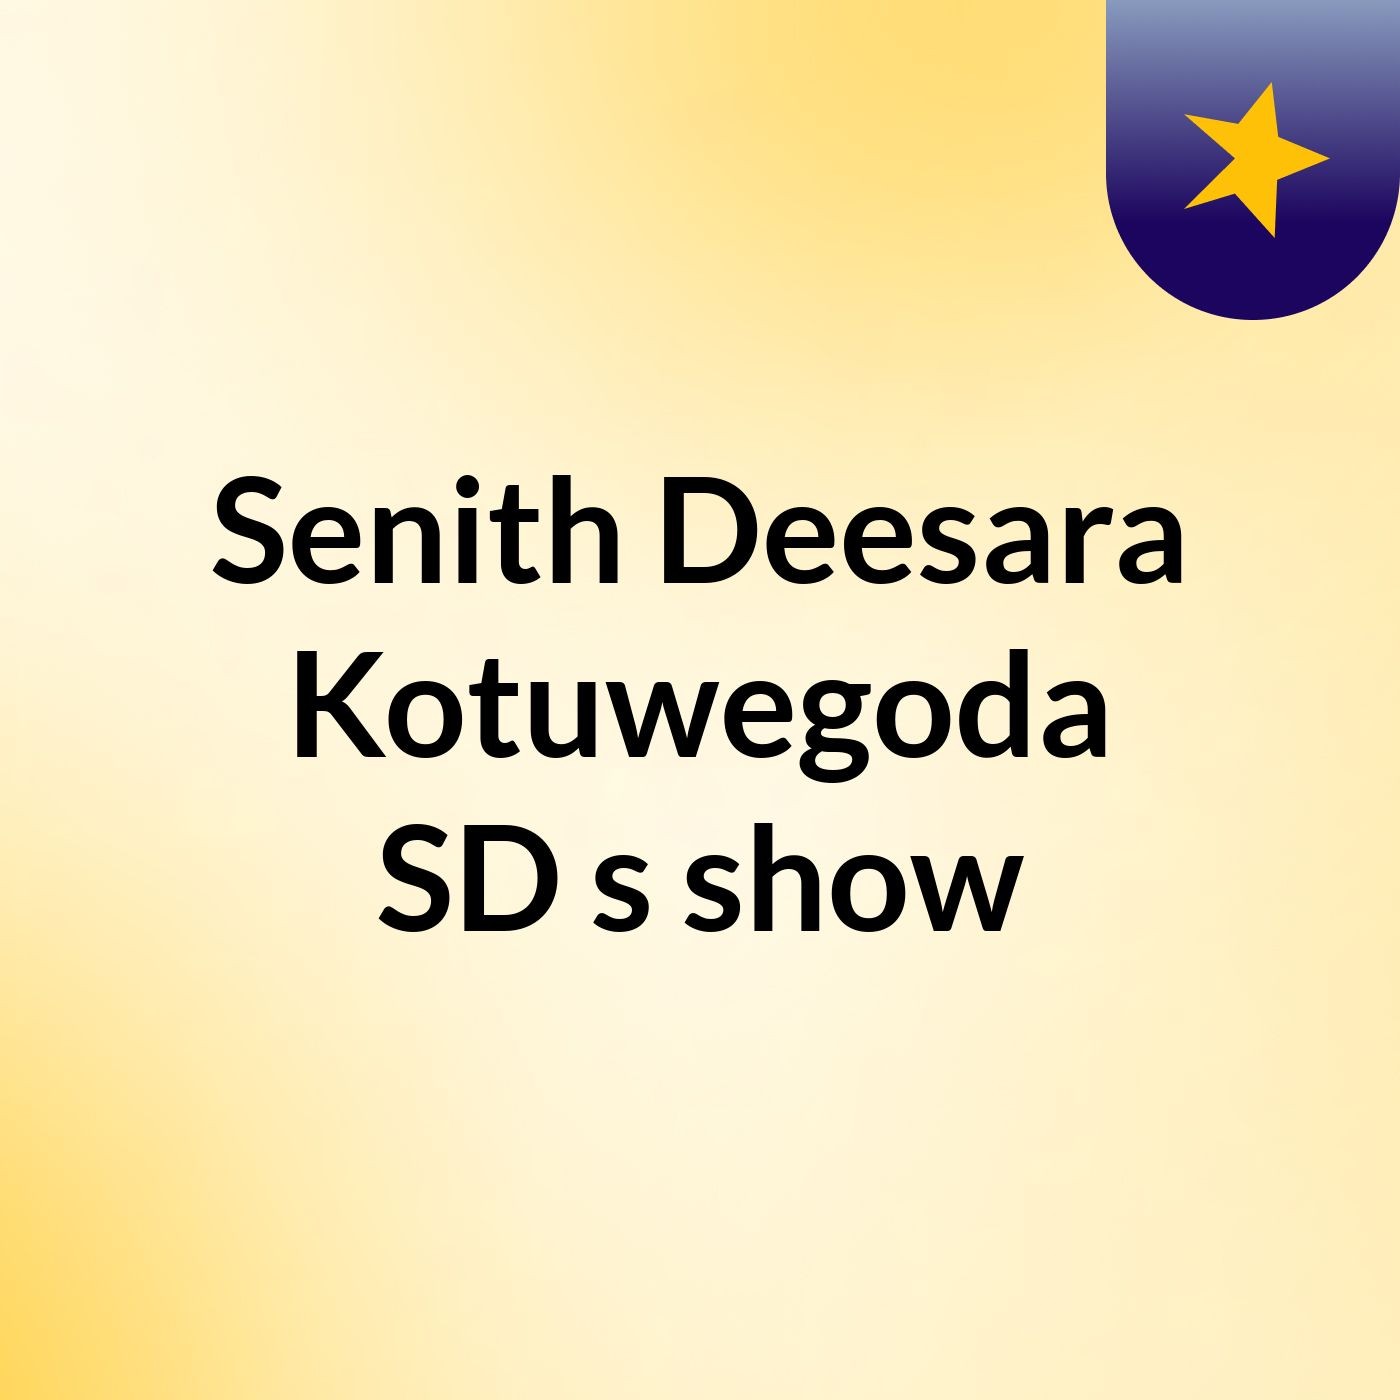 Senith Deesara Kotuwegoda SD's show